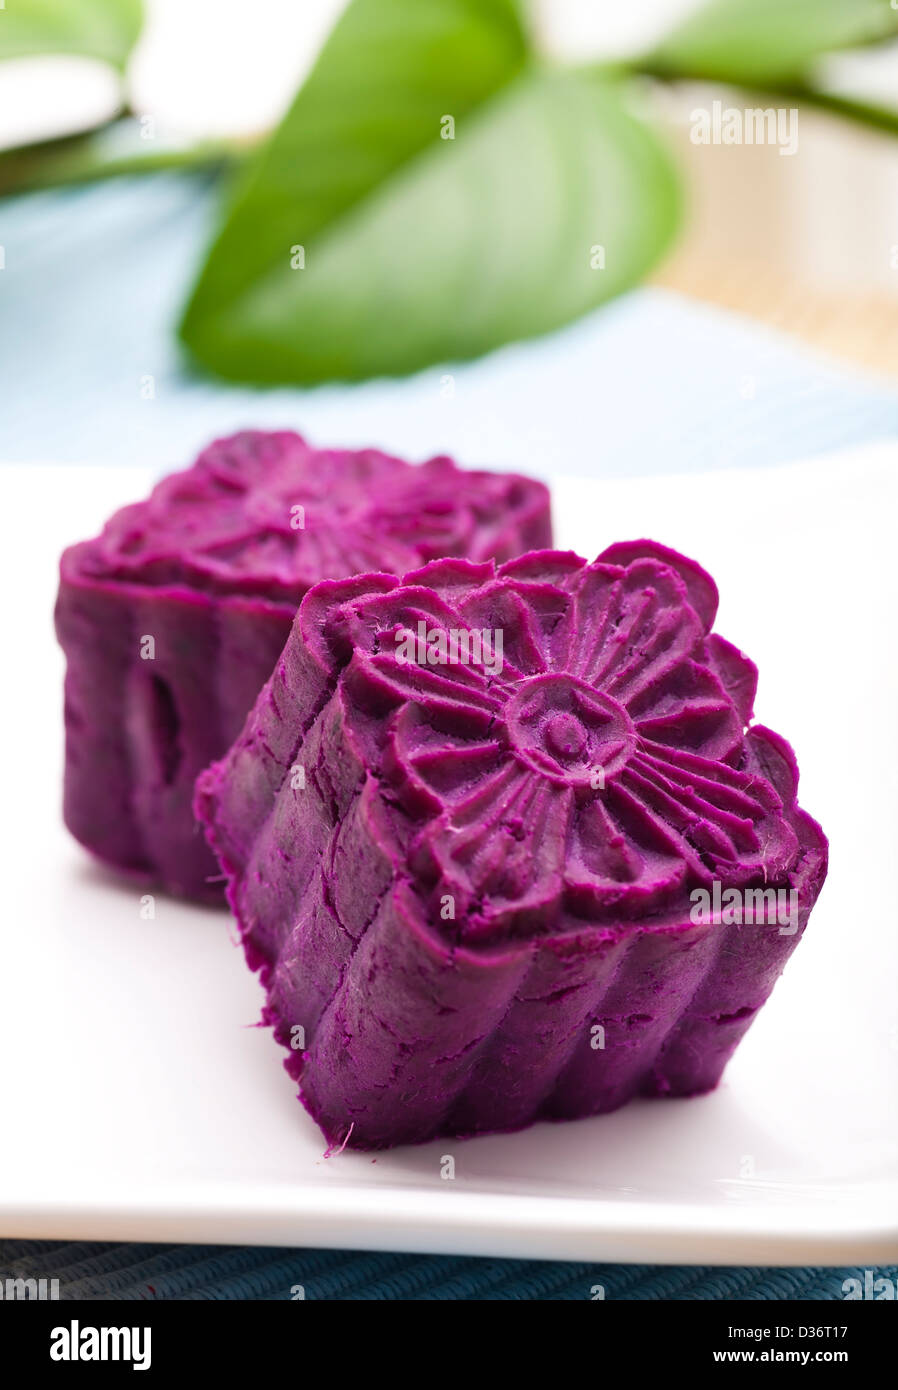 Cakes made of purple sweet yam Stock Photo